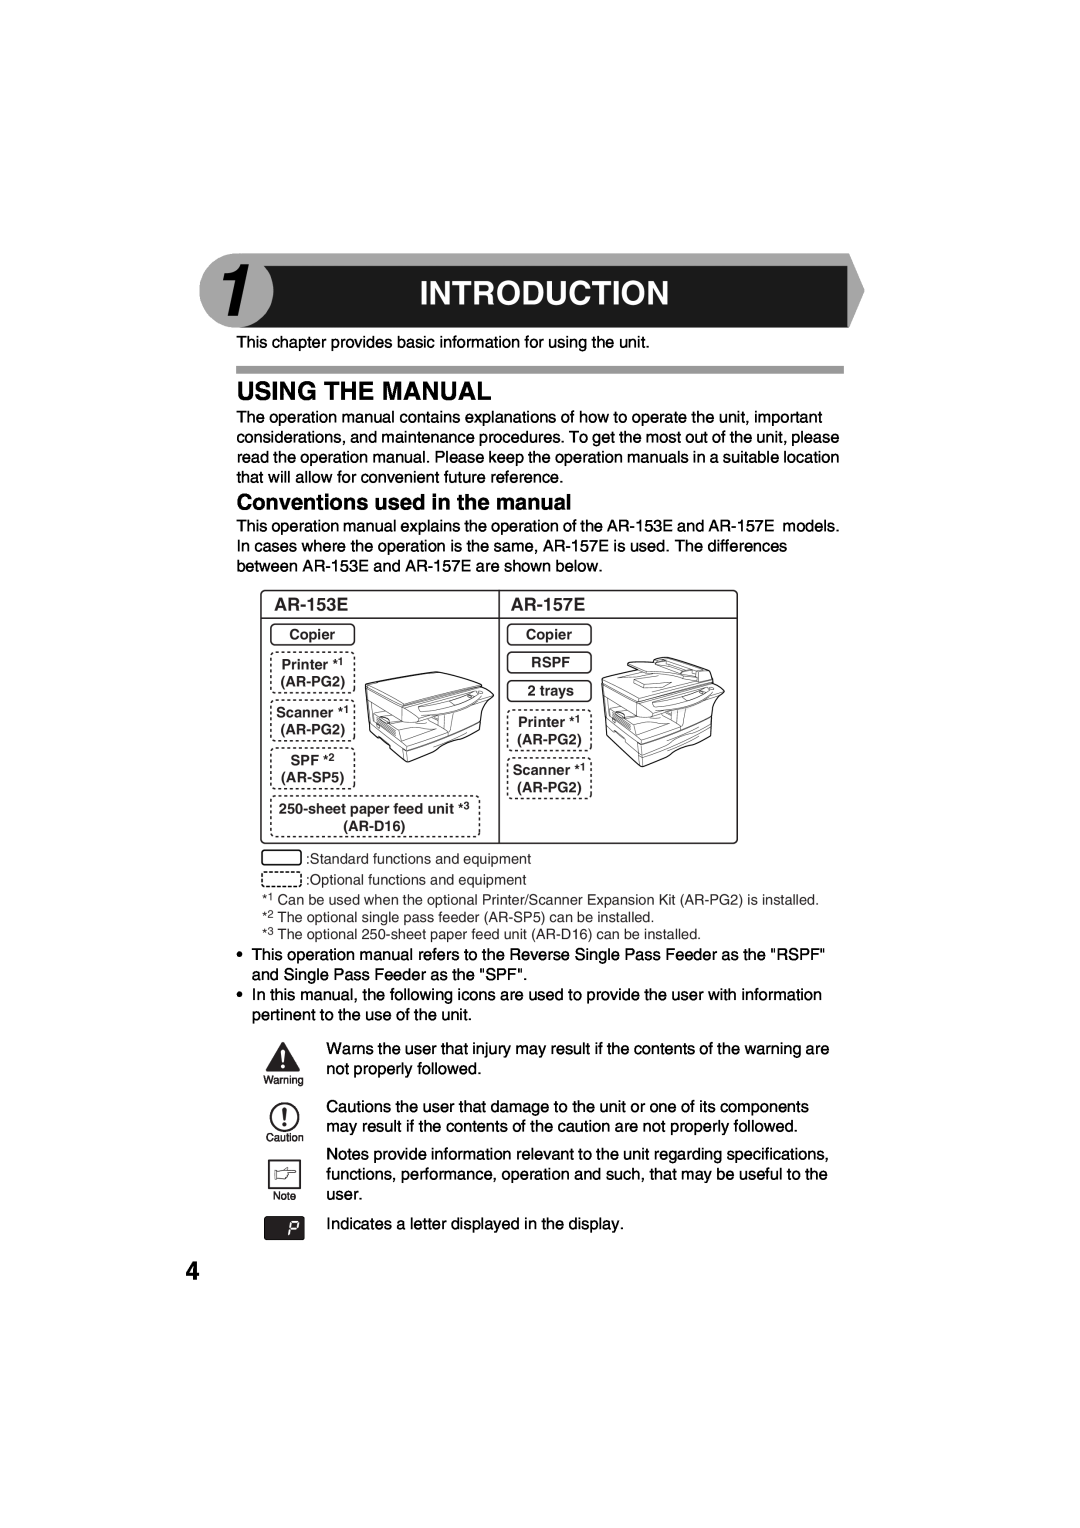 Sharp operation manual Introduction, Using The Manual, AR-153EAR-157E 